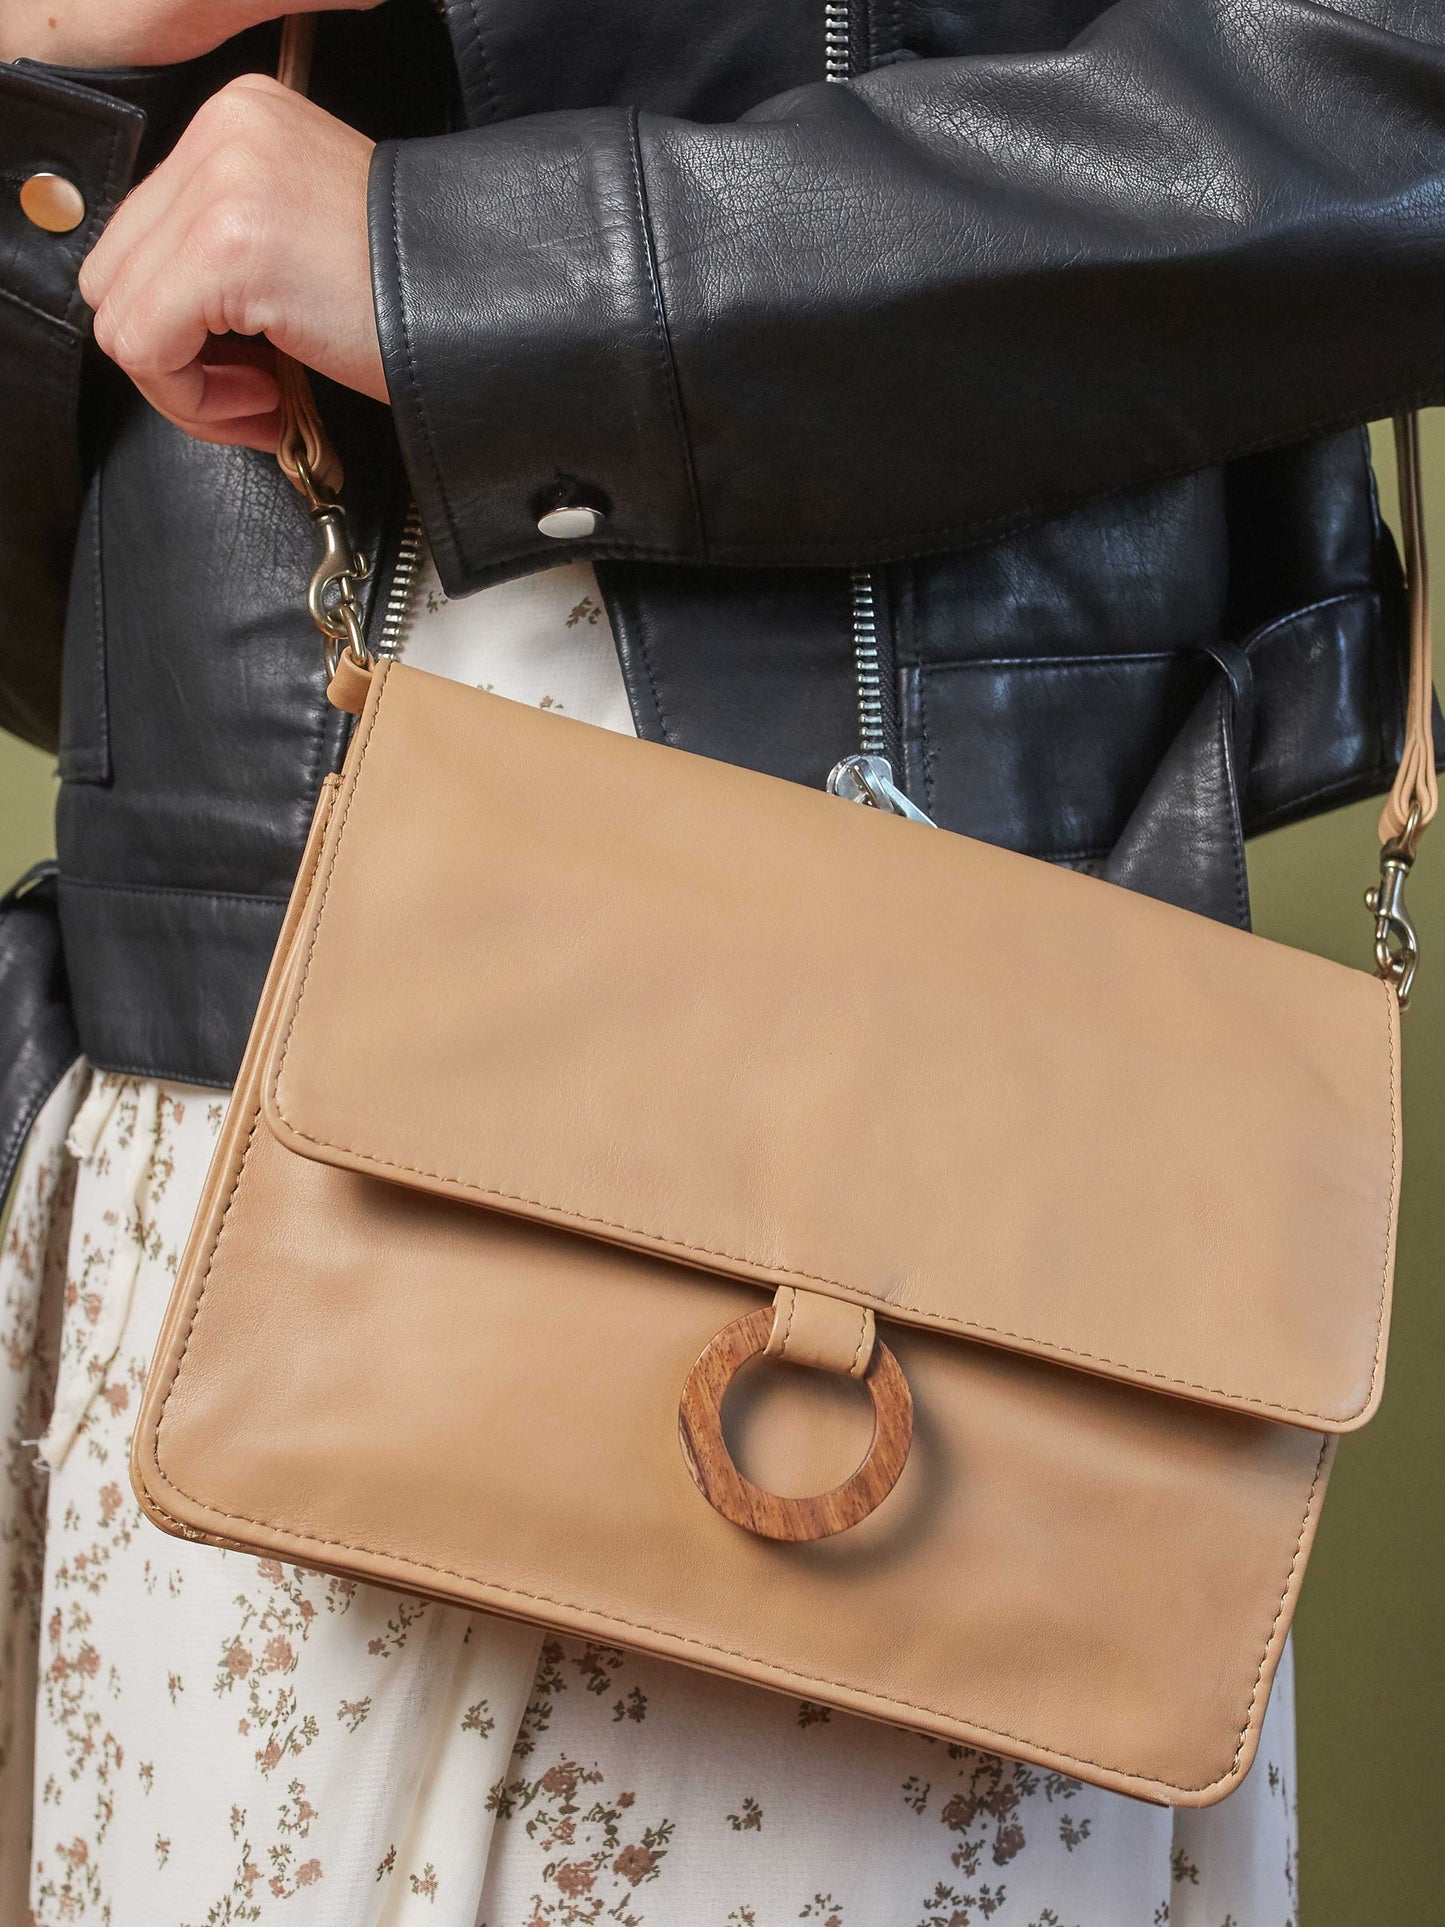 model wearing Leather-wallet crossbody bag - Wood Wallet Crossbody cappuccino color handbags by payton james Nashville leather handbag designer